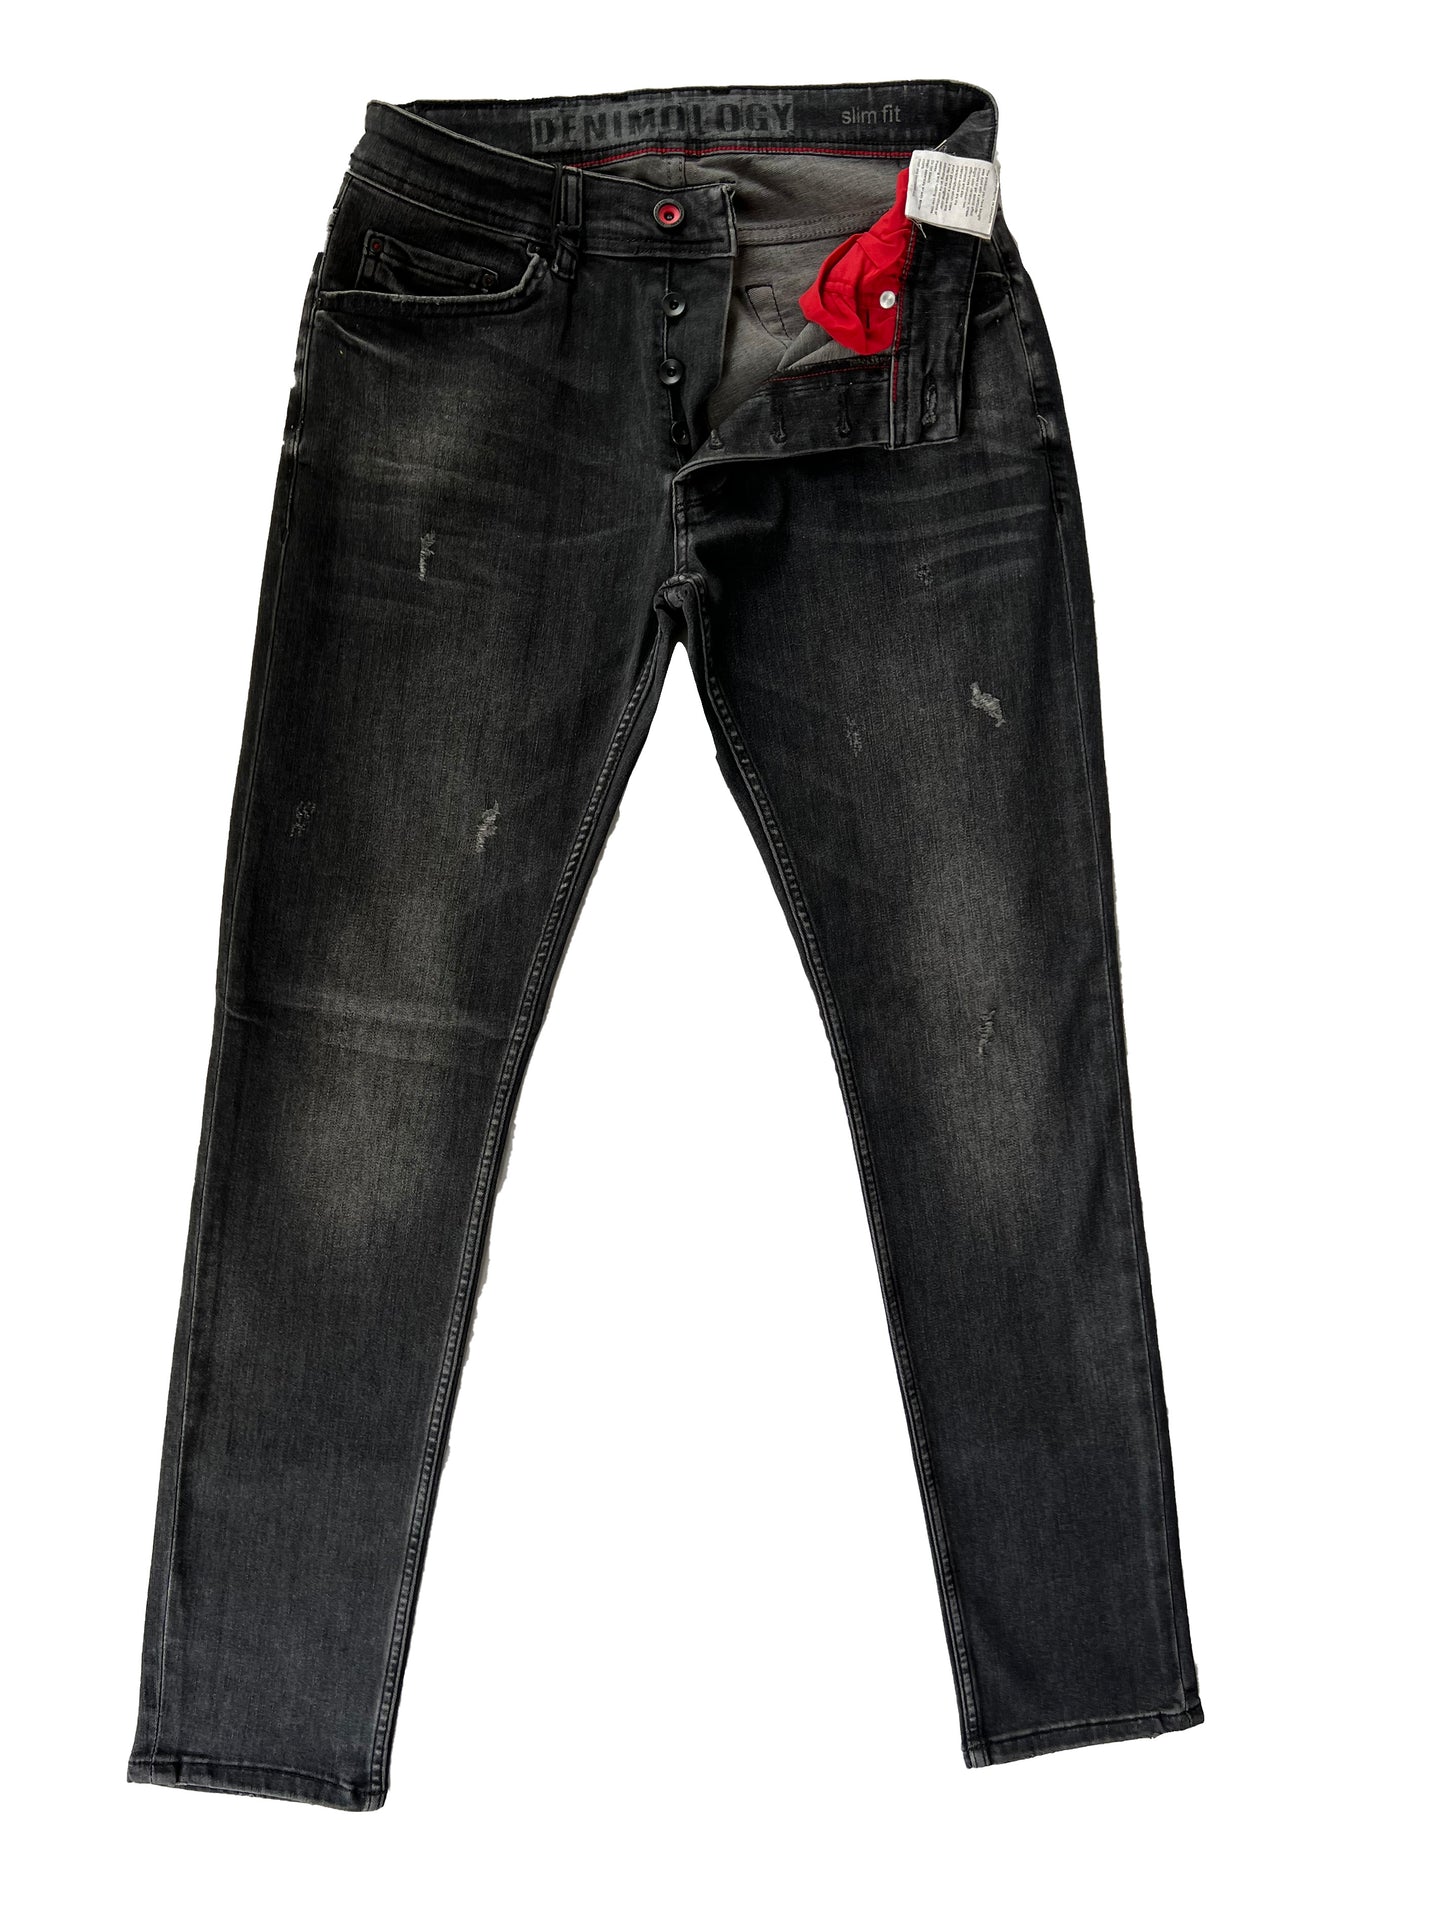 Men's Slim Fit Comfortable Jeans, Trousers- Moffat